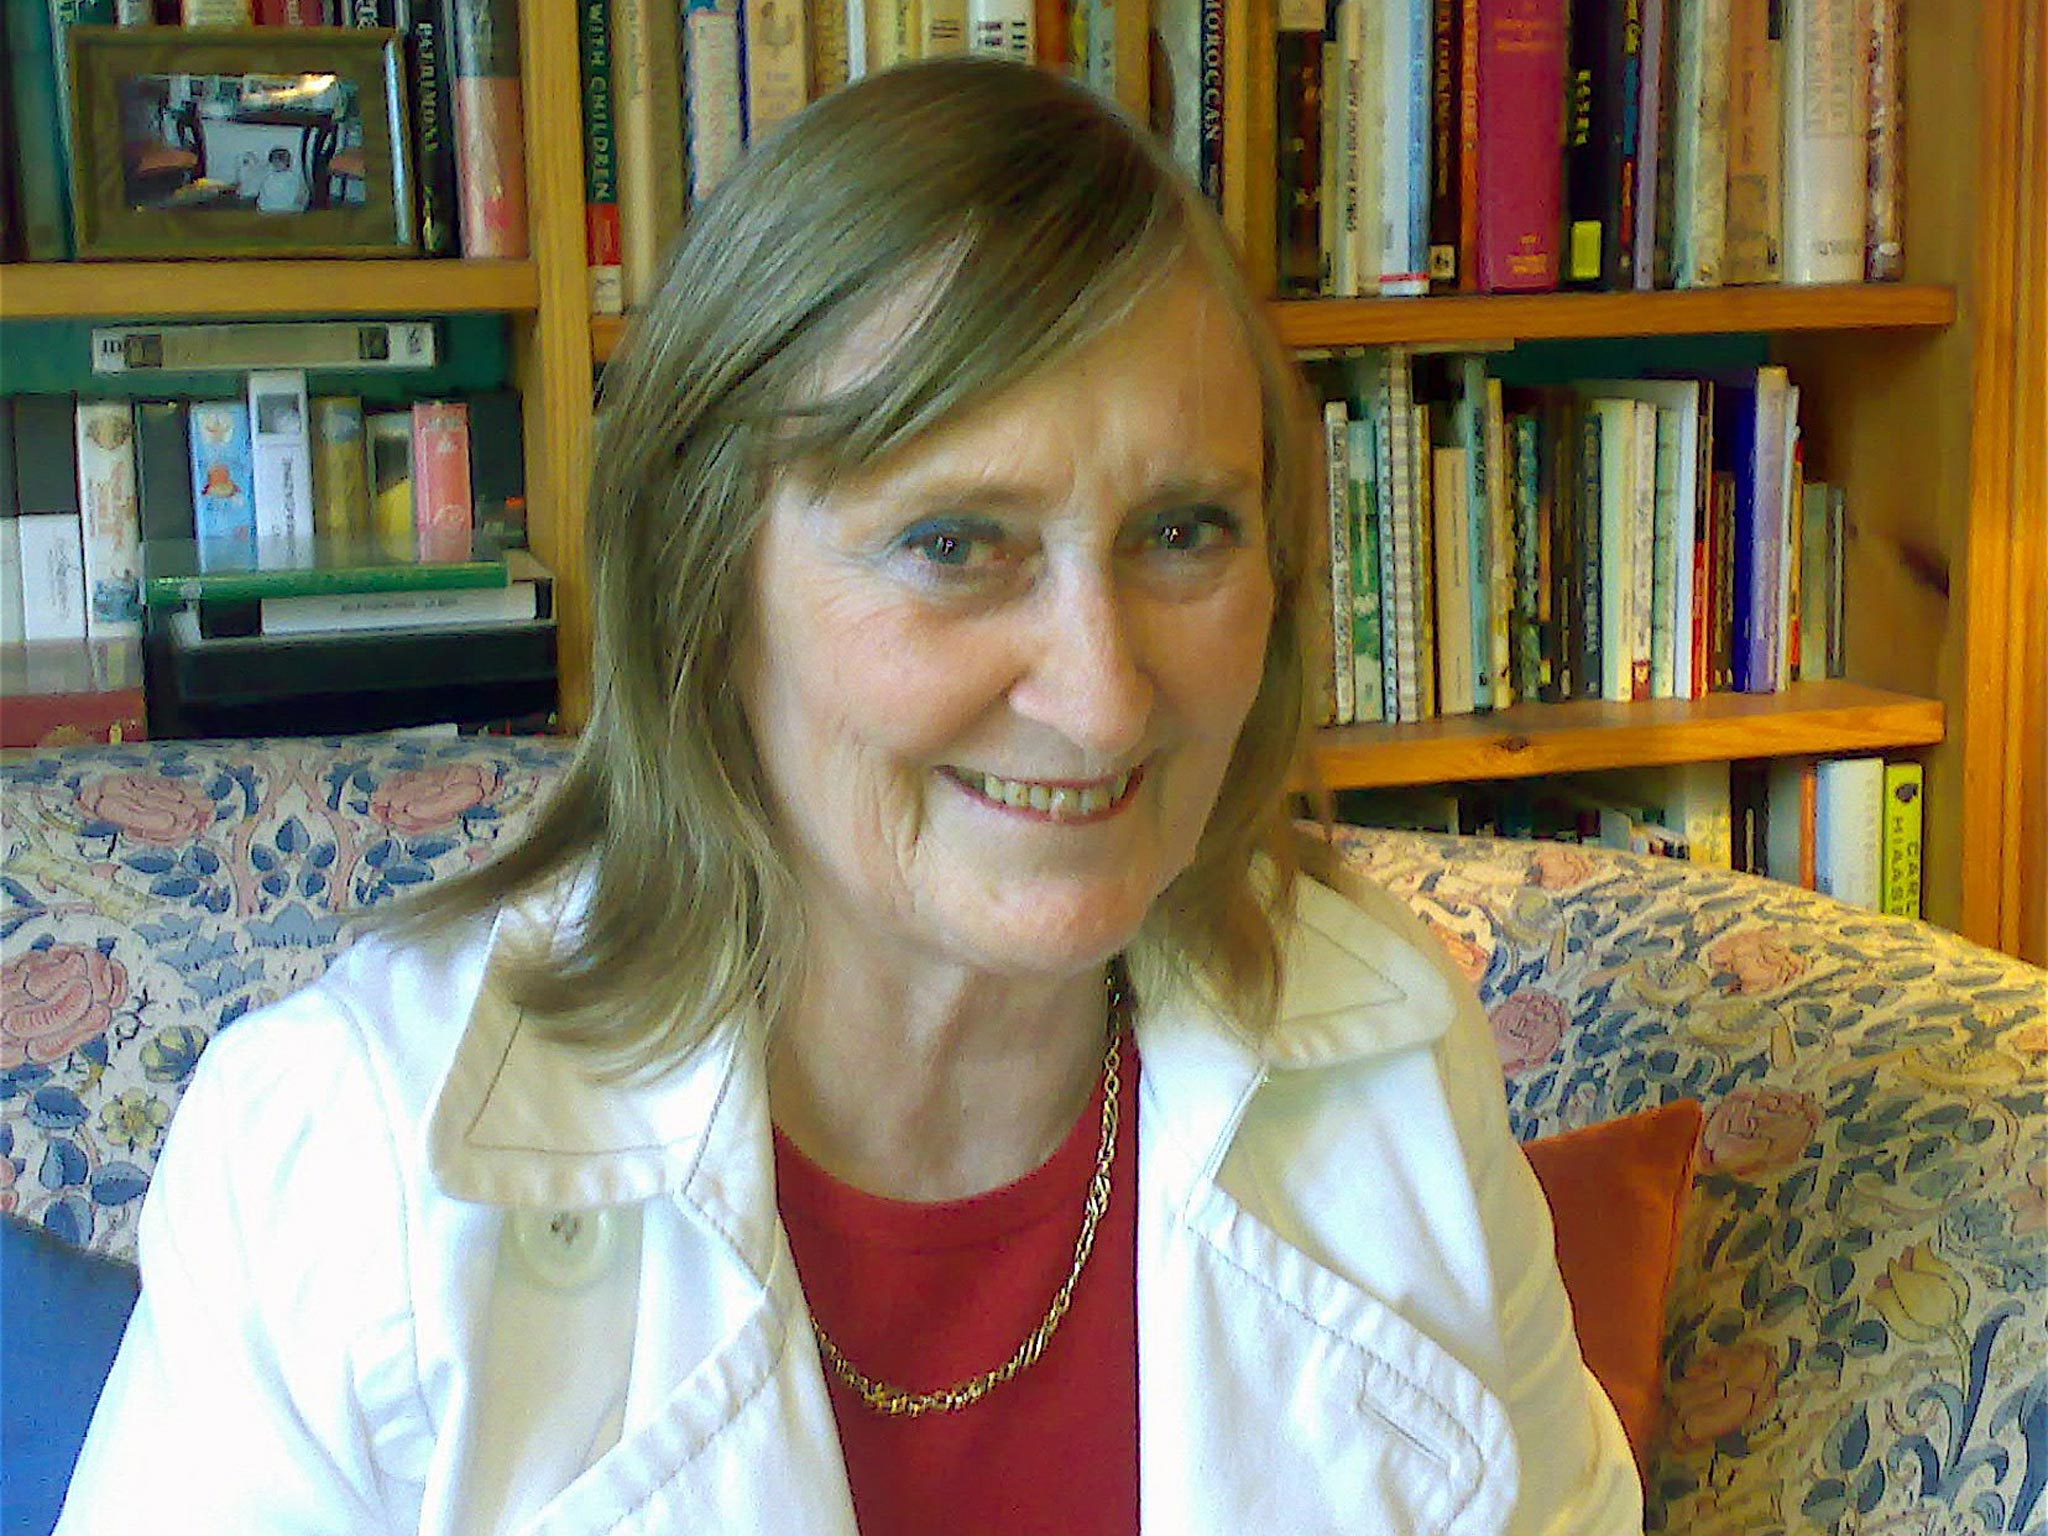 Deborah Rogers received the lifetime achievement award at The London Book Fair last month